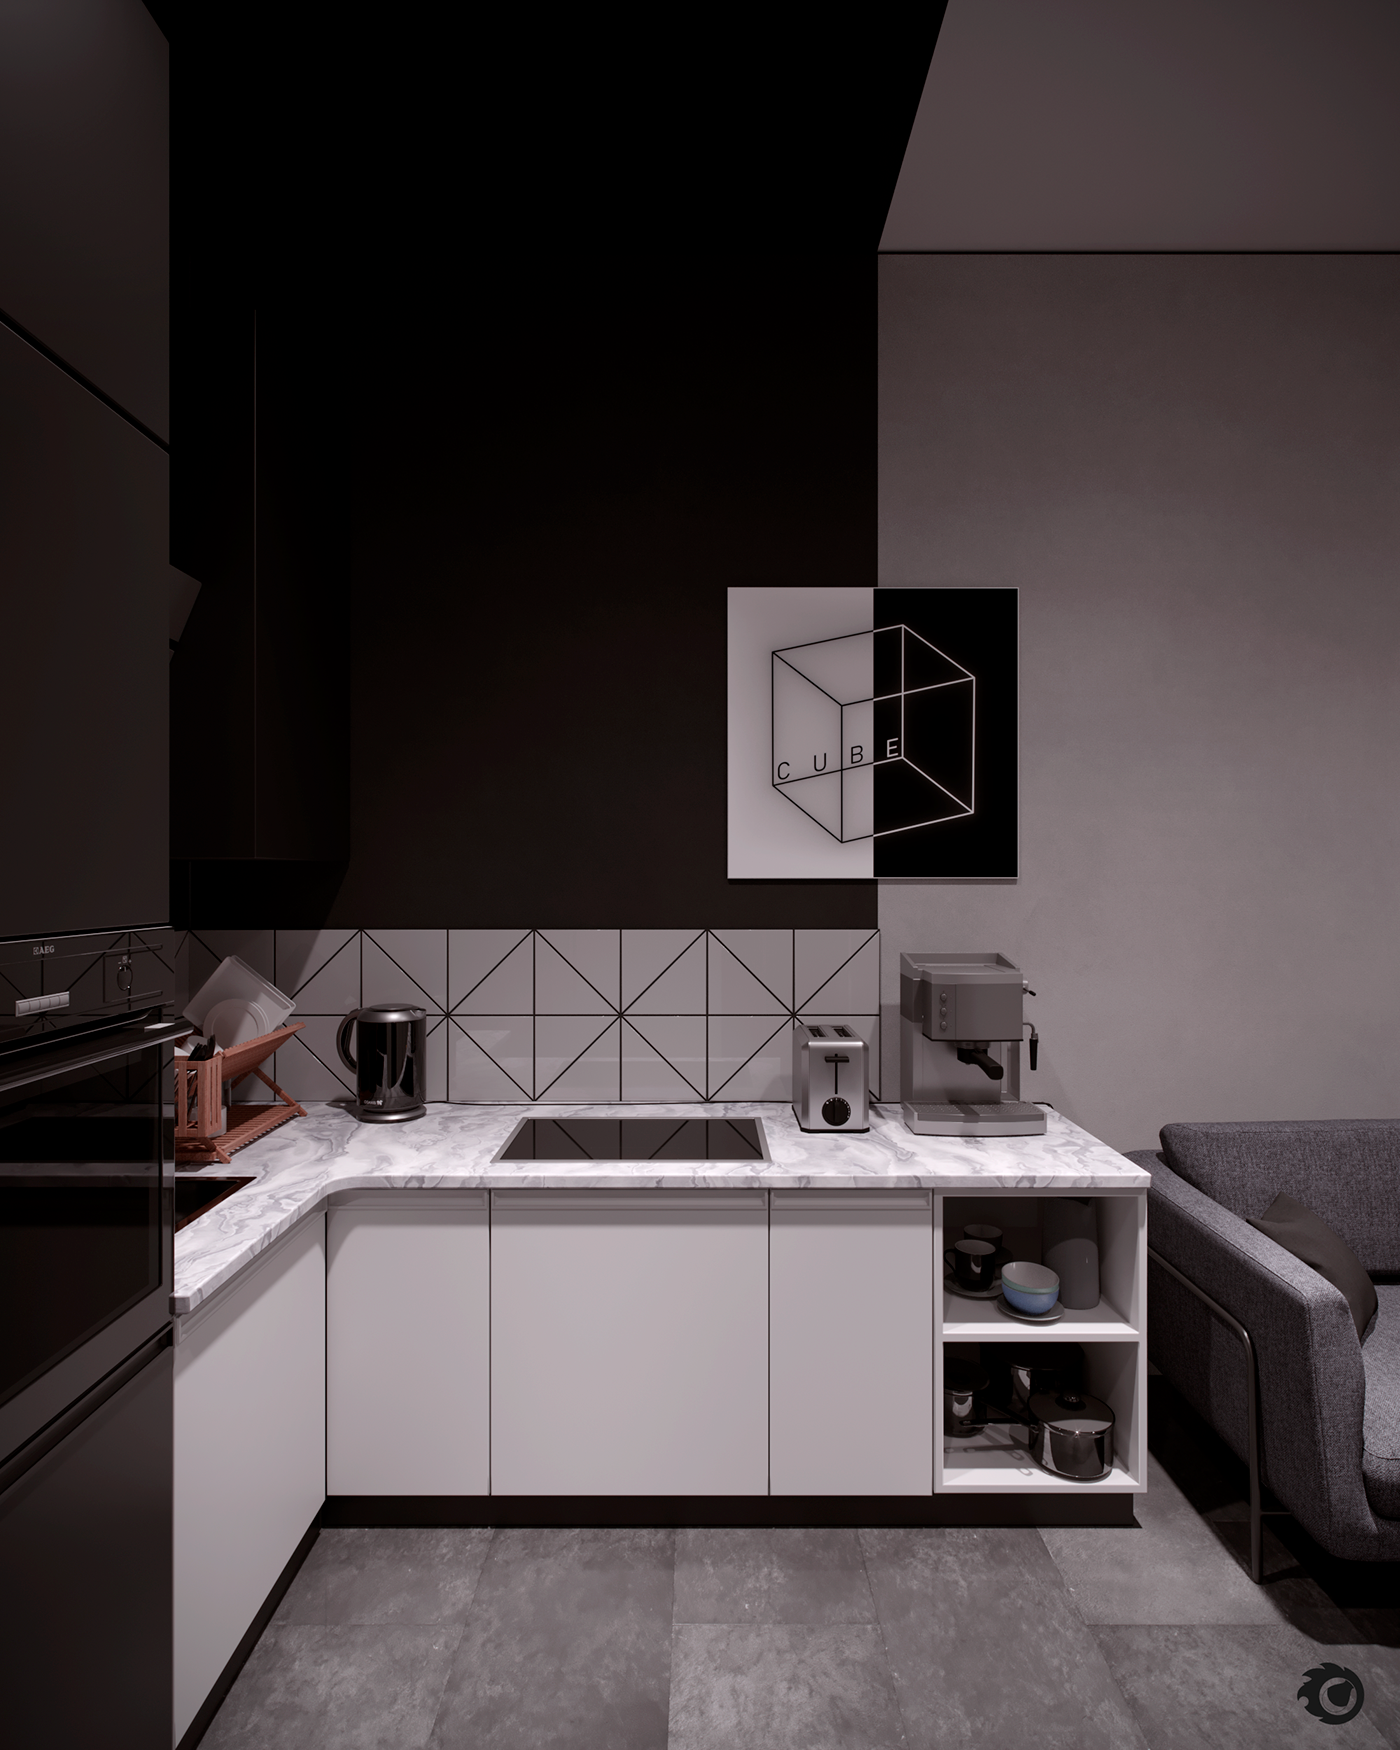 cinema 4d corona renderer corona corona render  maxon Interior kitchen interior black interior Minimalism